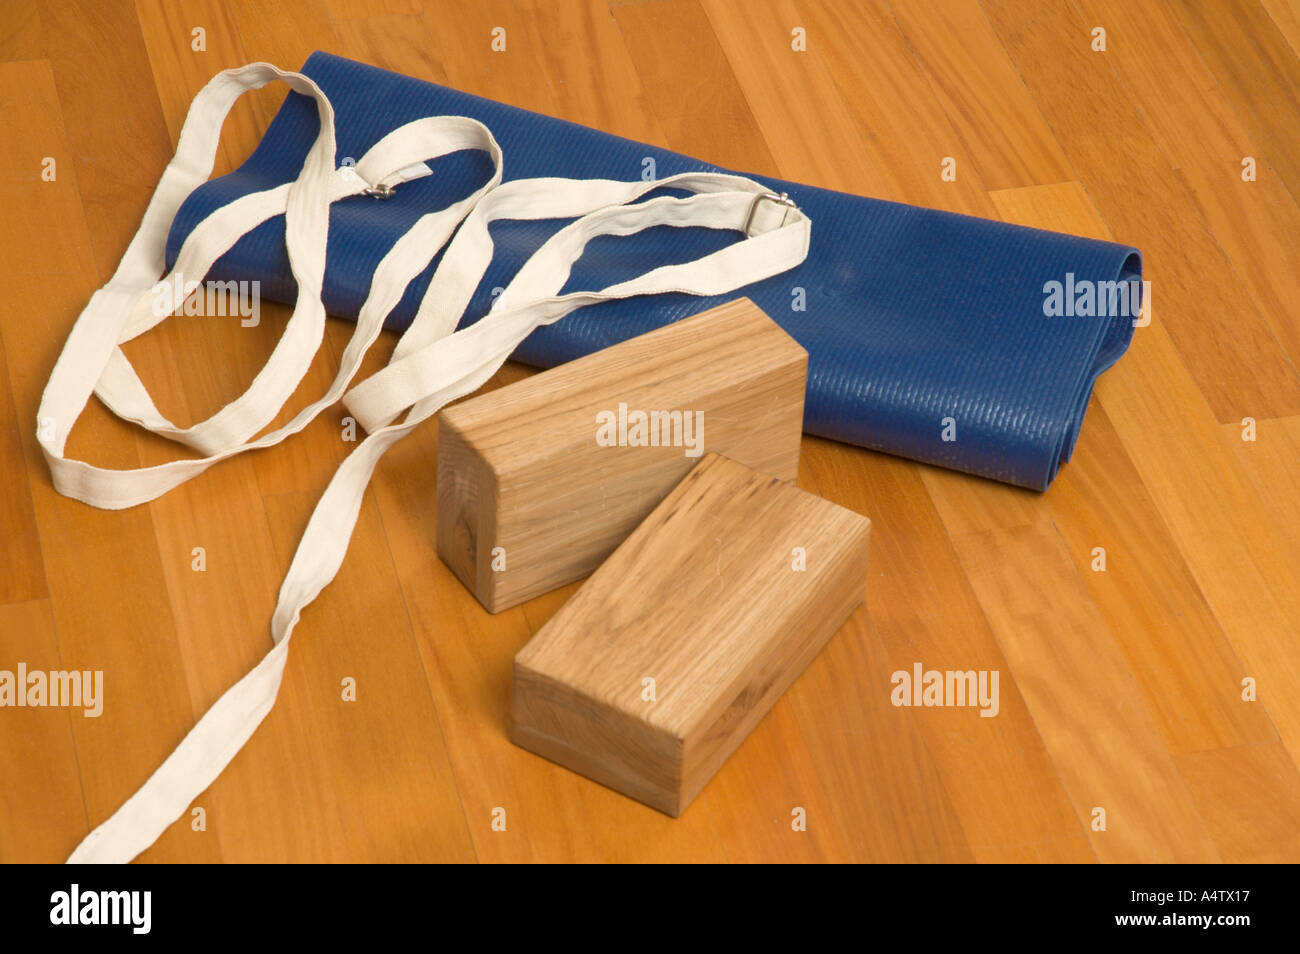 iyengar yoga wooden props